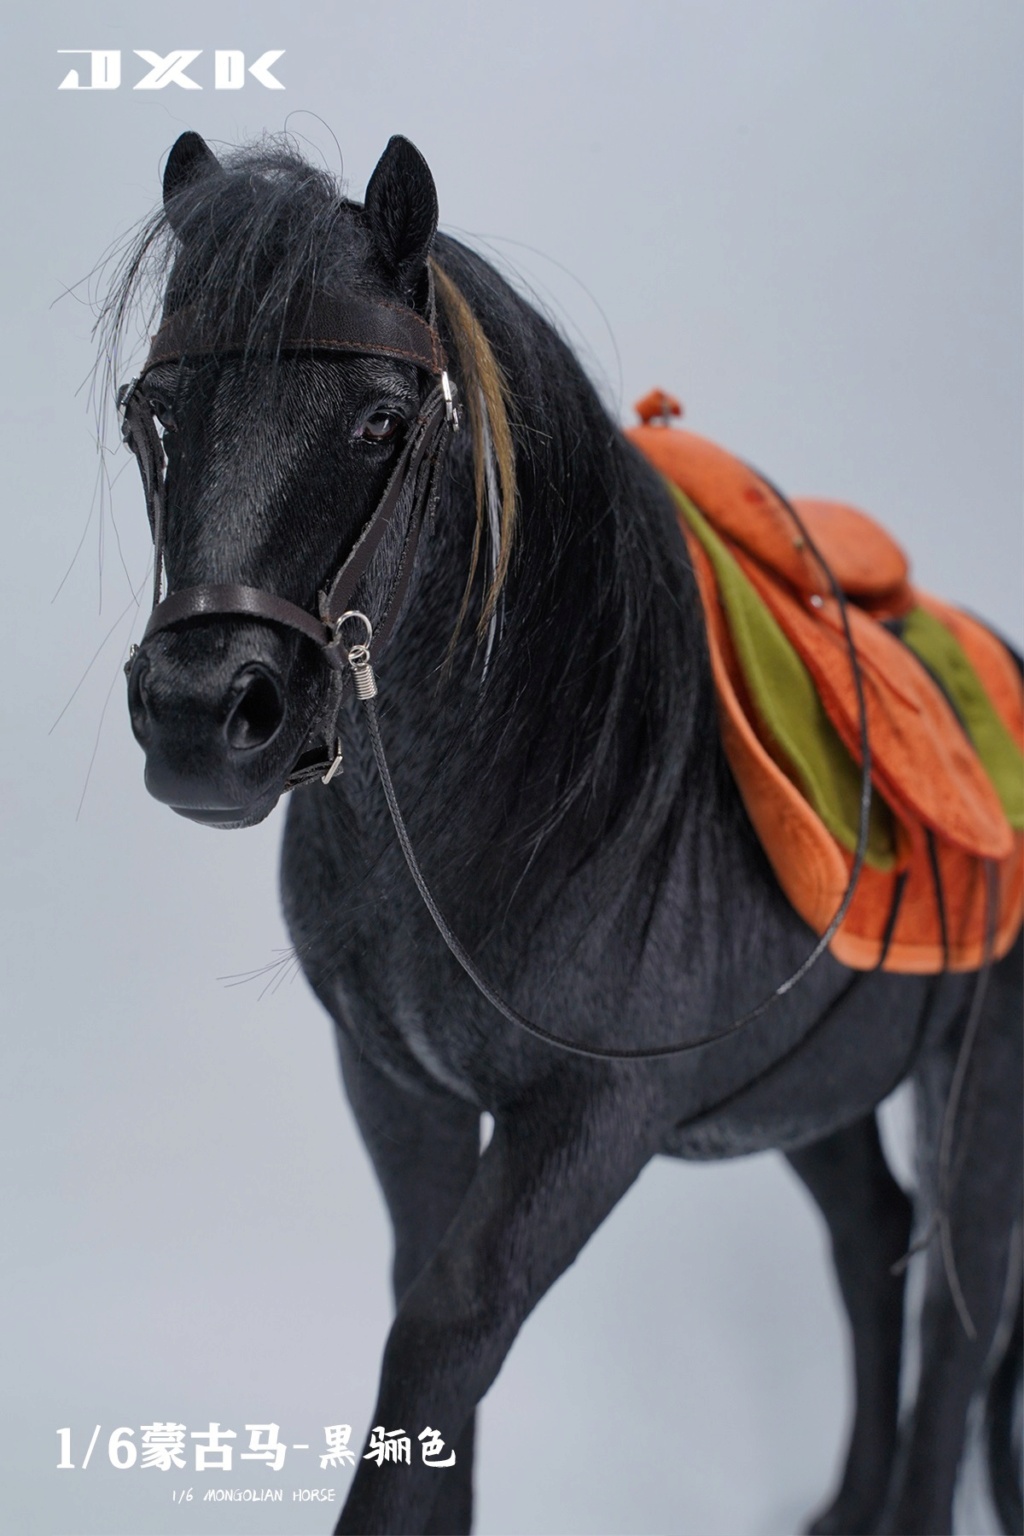 Mongolian - NEW PRODUCT: JXK Studio: Mongolian Horse (JXK165) (PIC HEAVY) 14464310